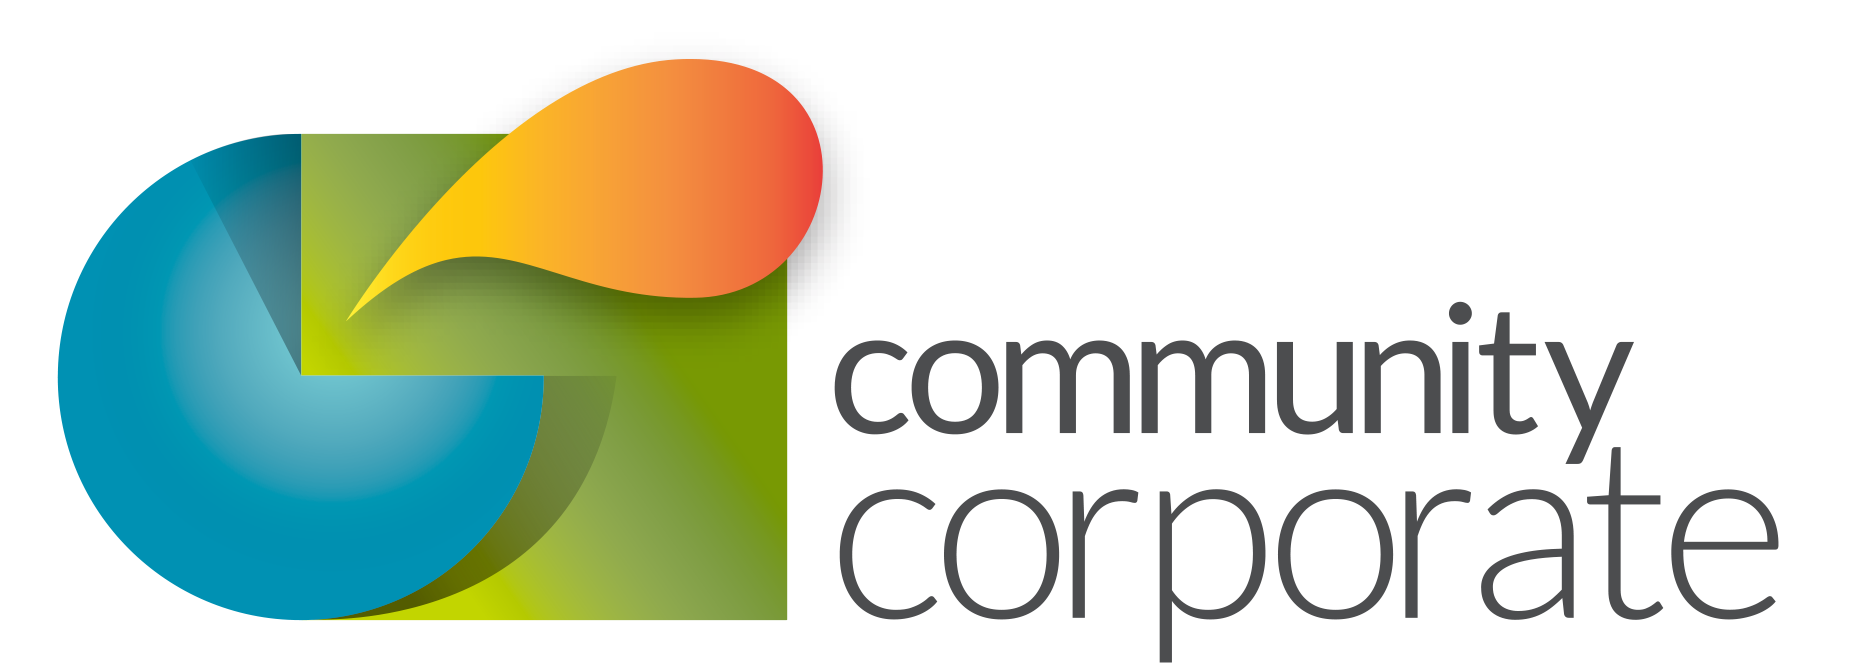 Community Corporate logo